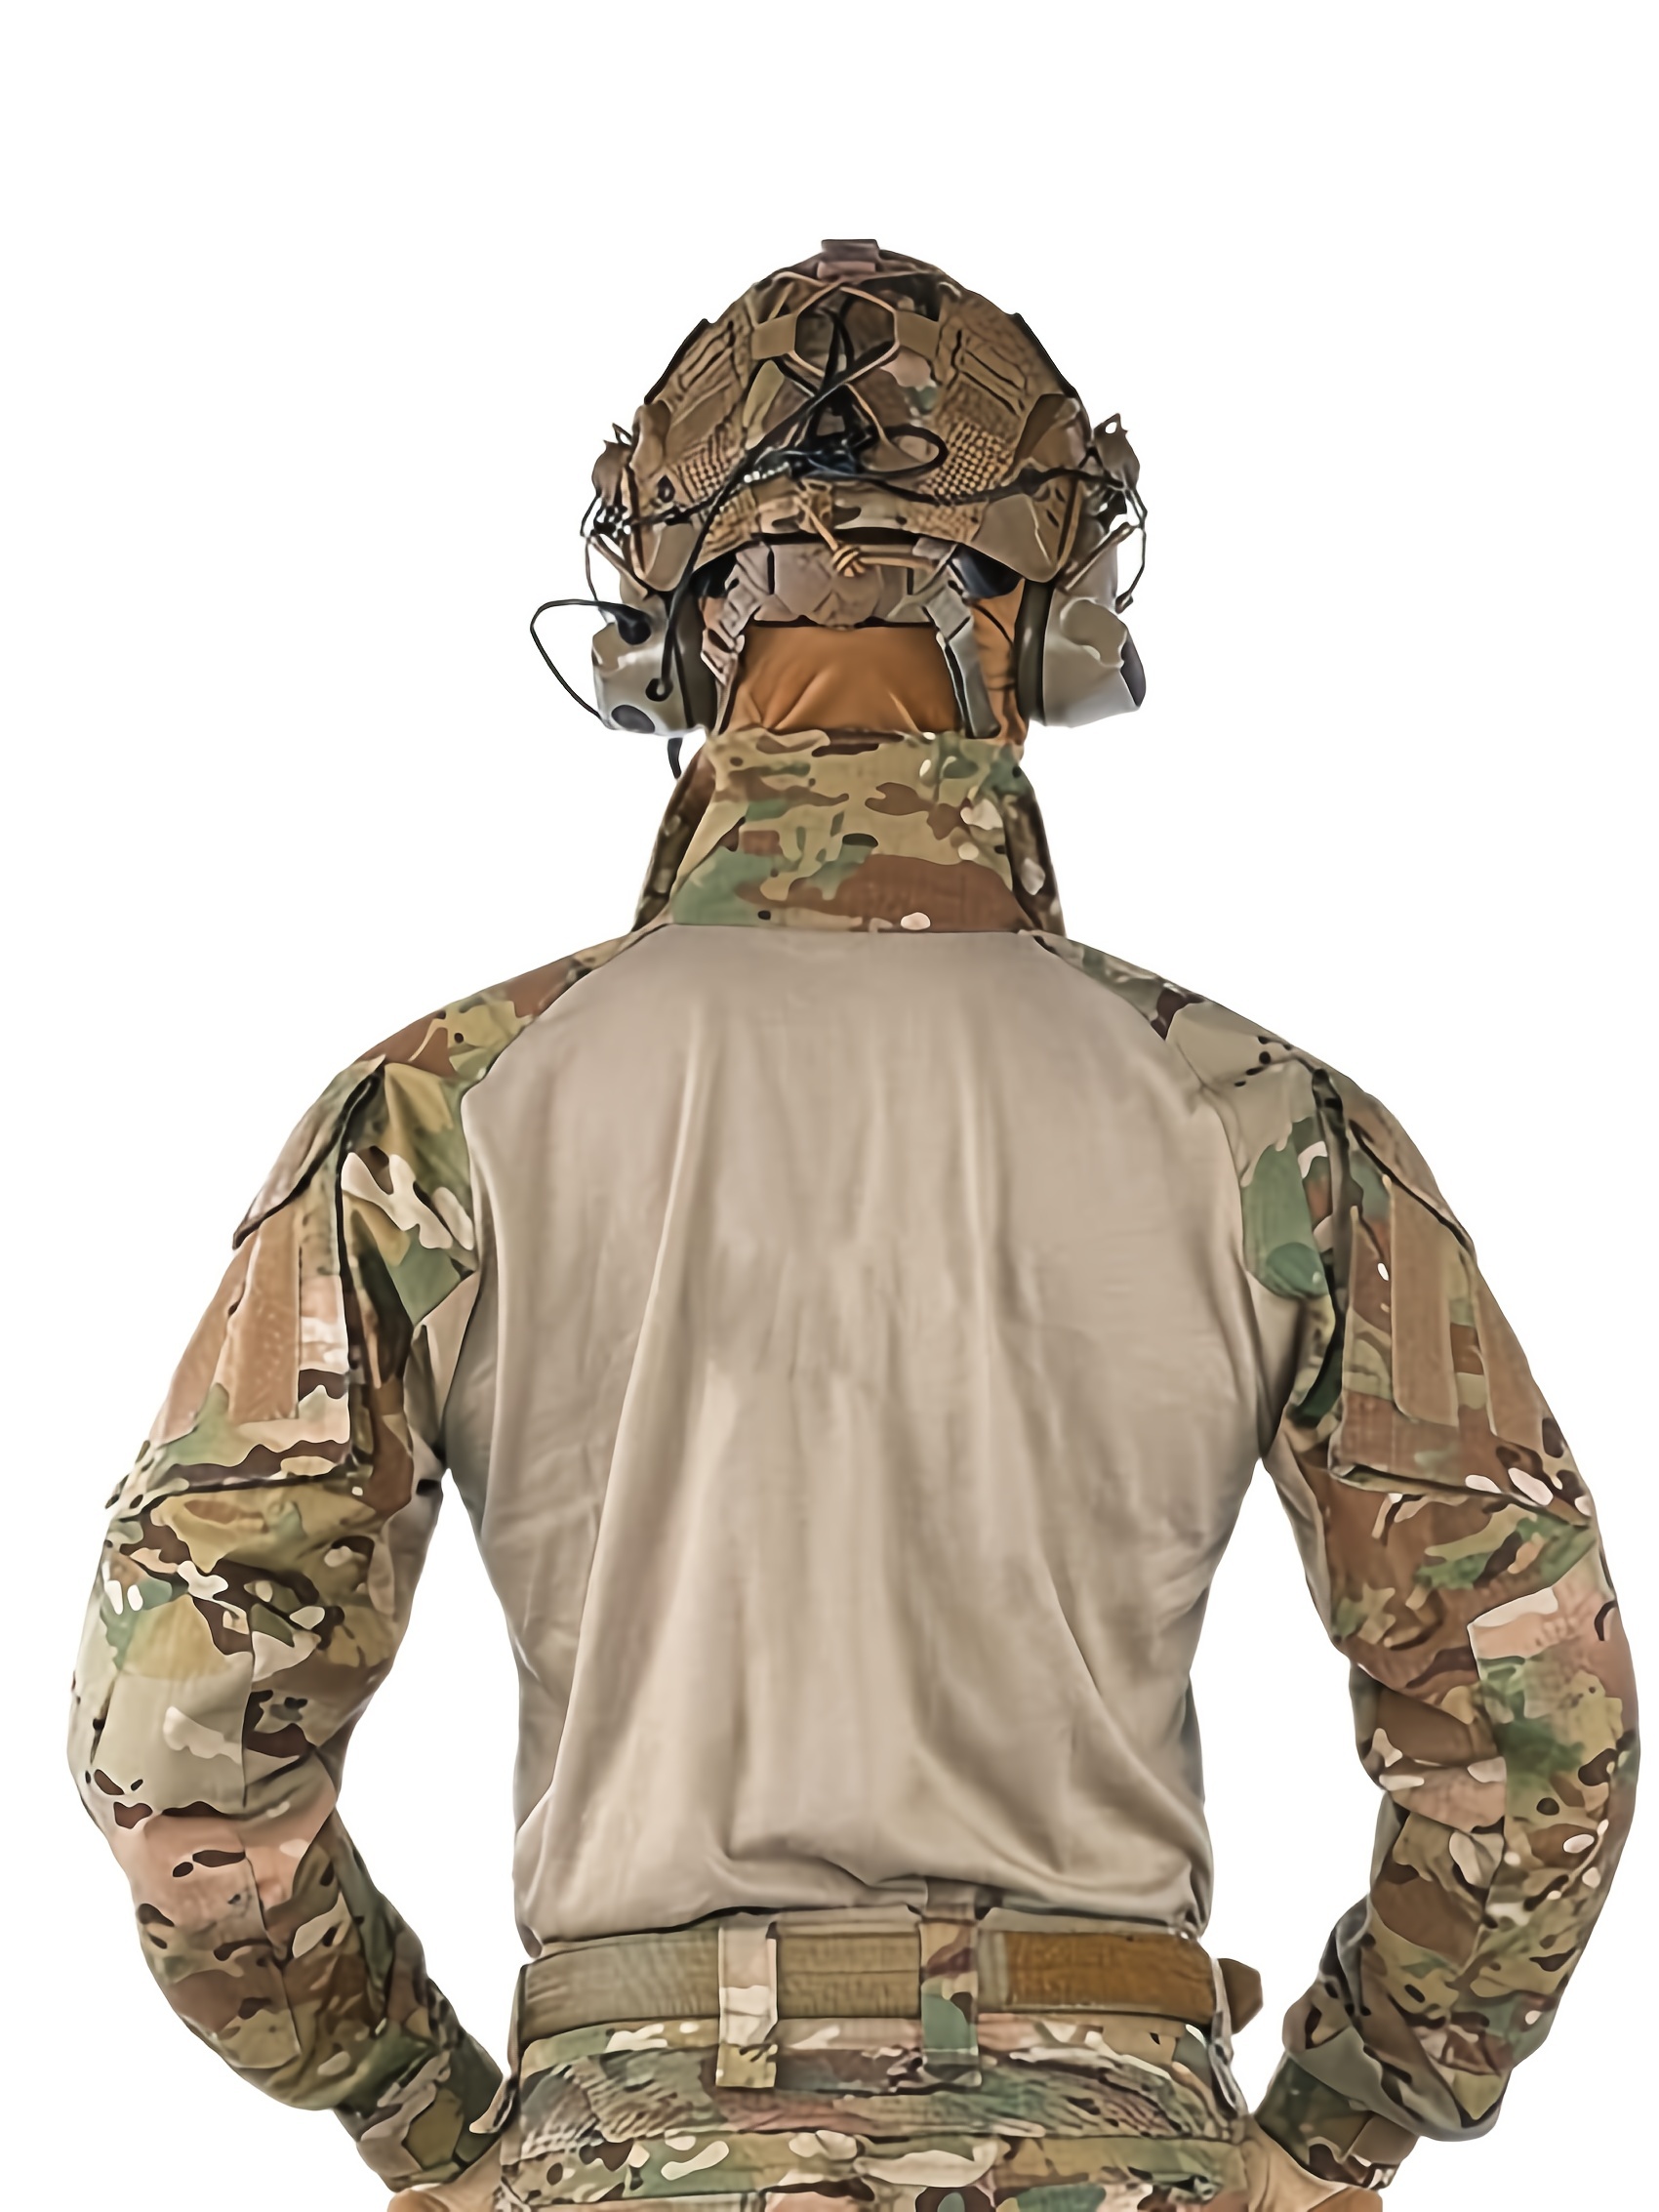 Tactica Defense Fashion - Who likes tactical leggings